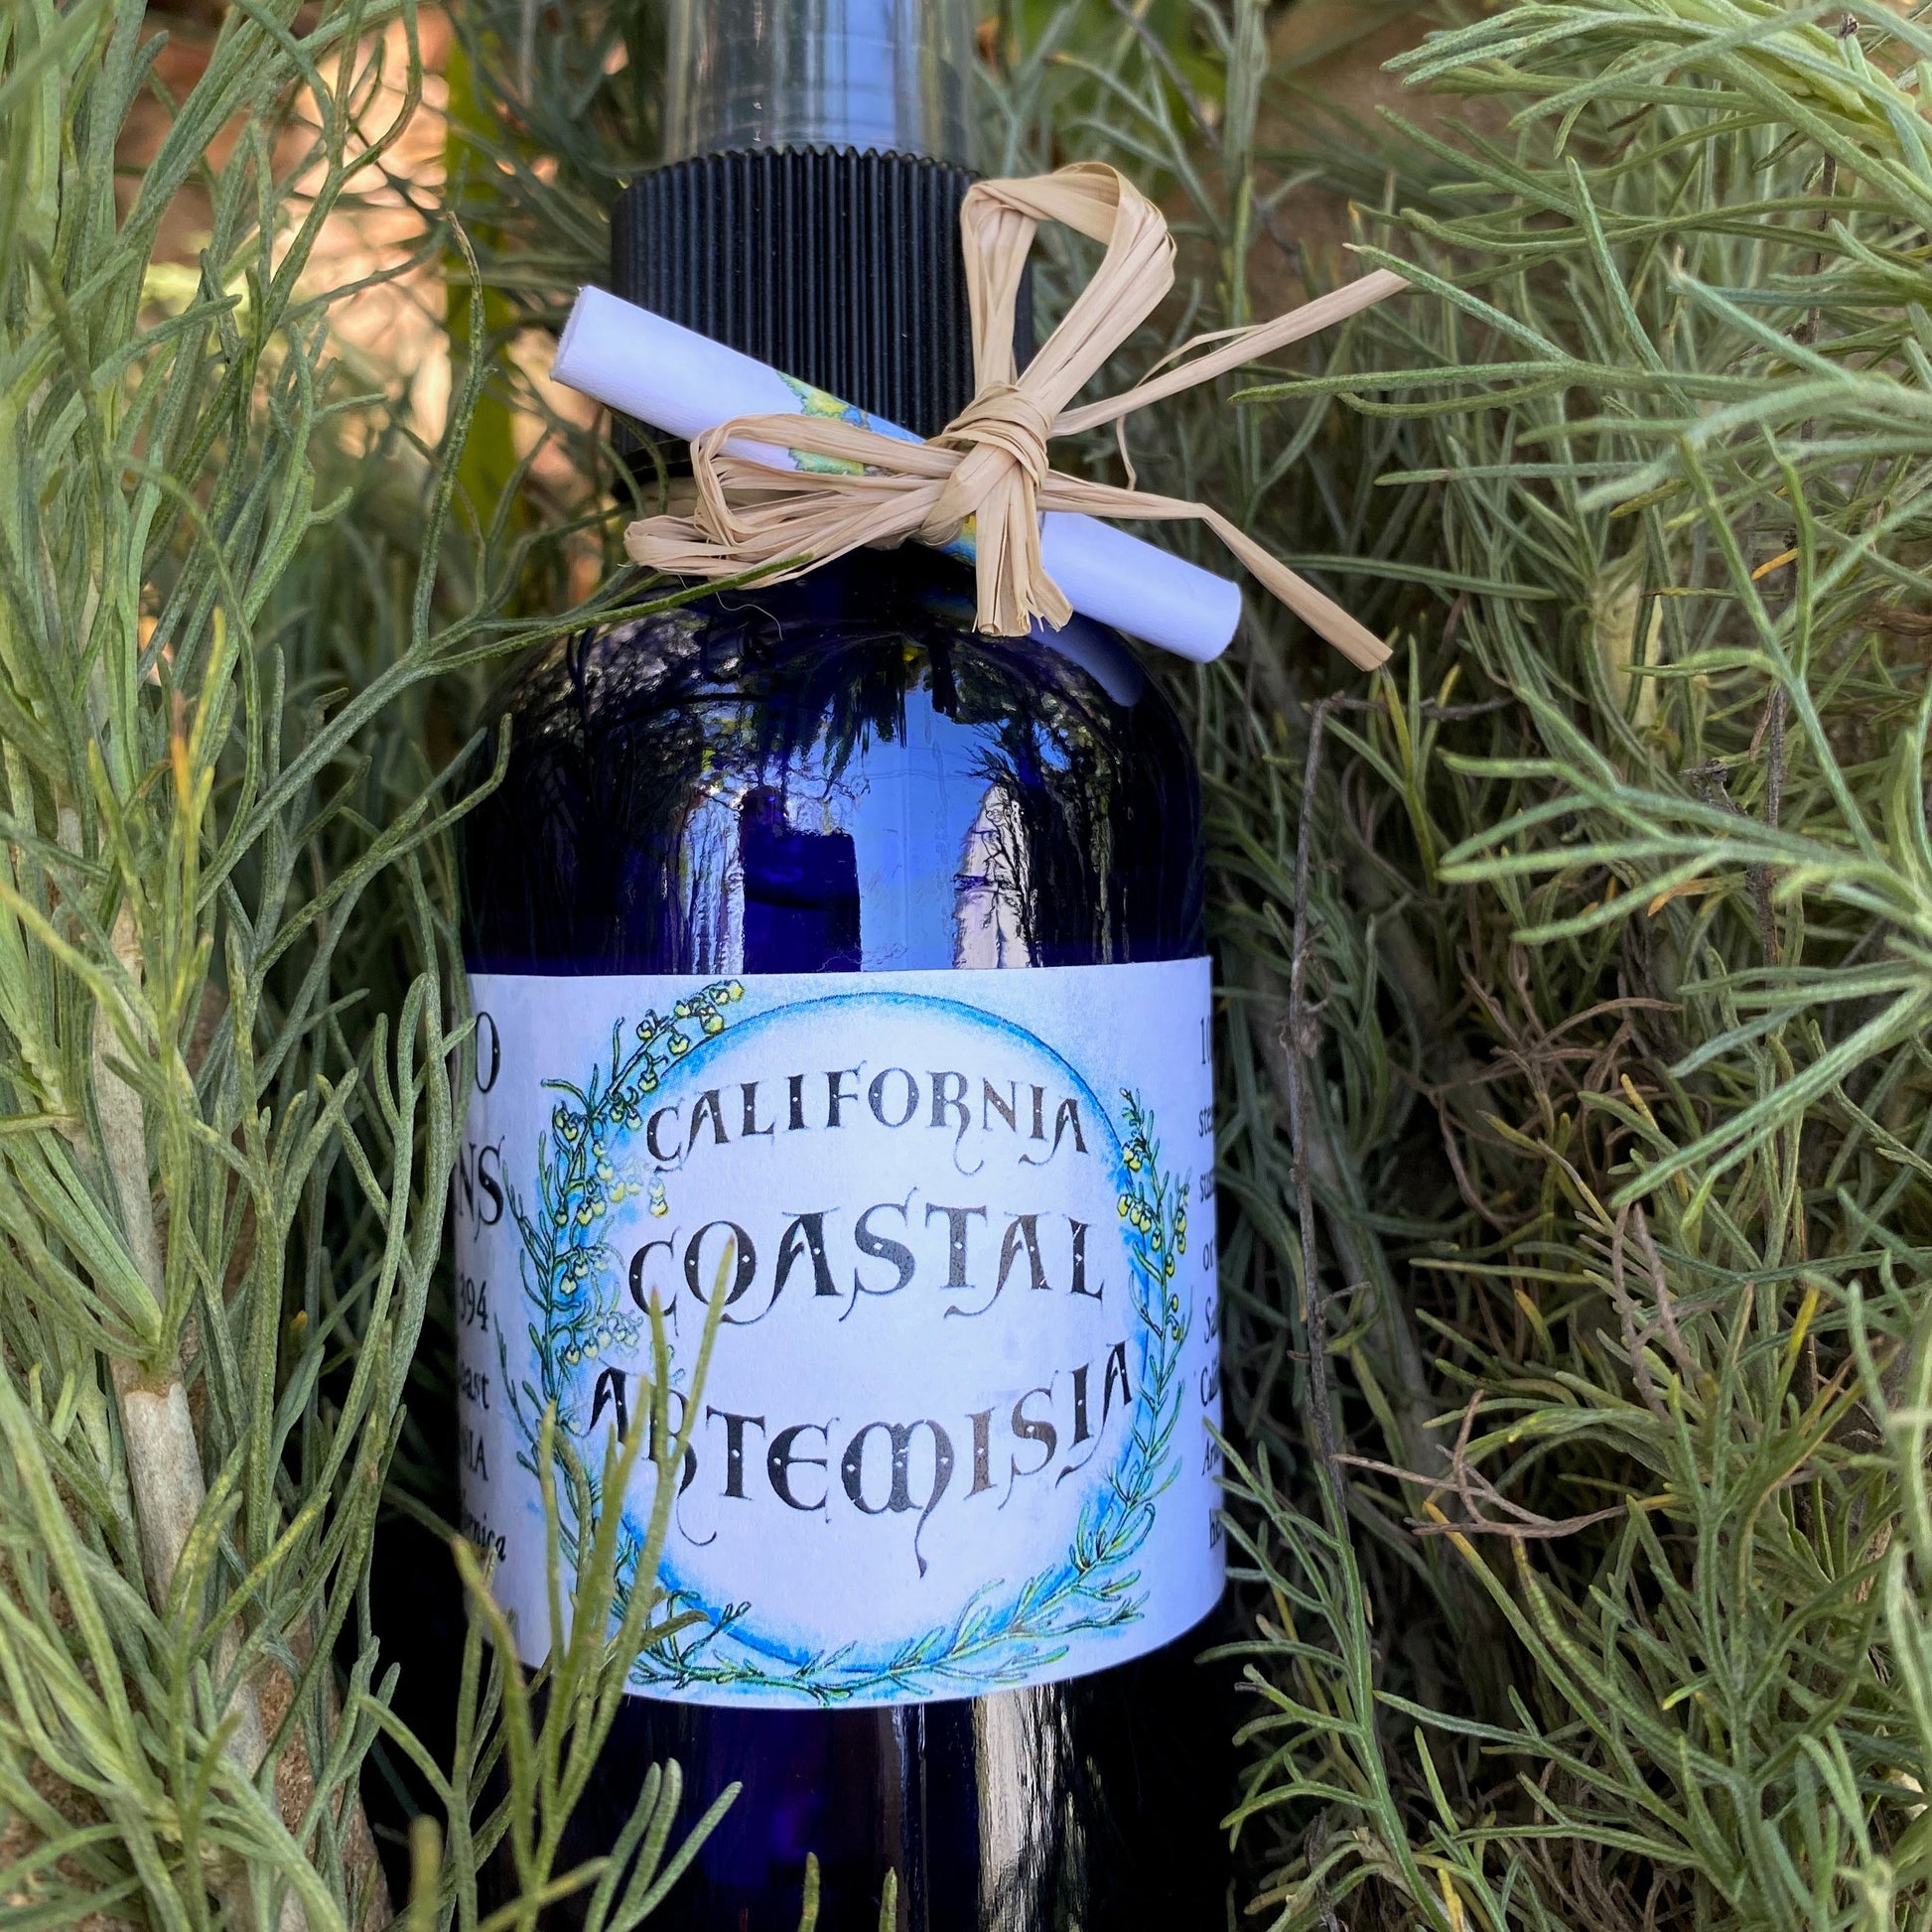 California Coastal Artemisia Hydrosol Bottle in 4 oz cobalt blue glass with sagebrush plant in background